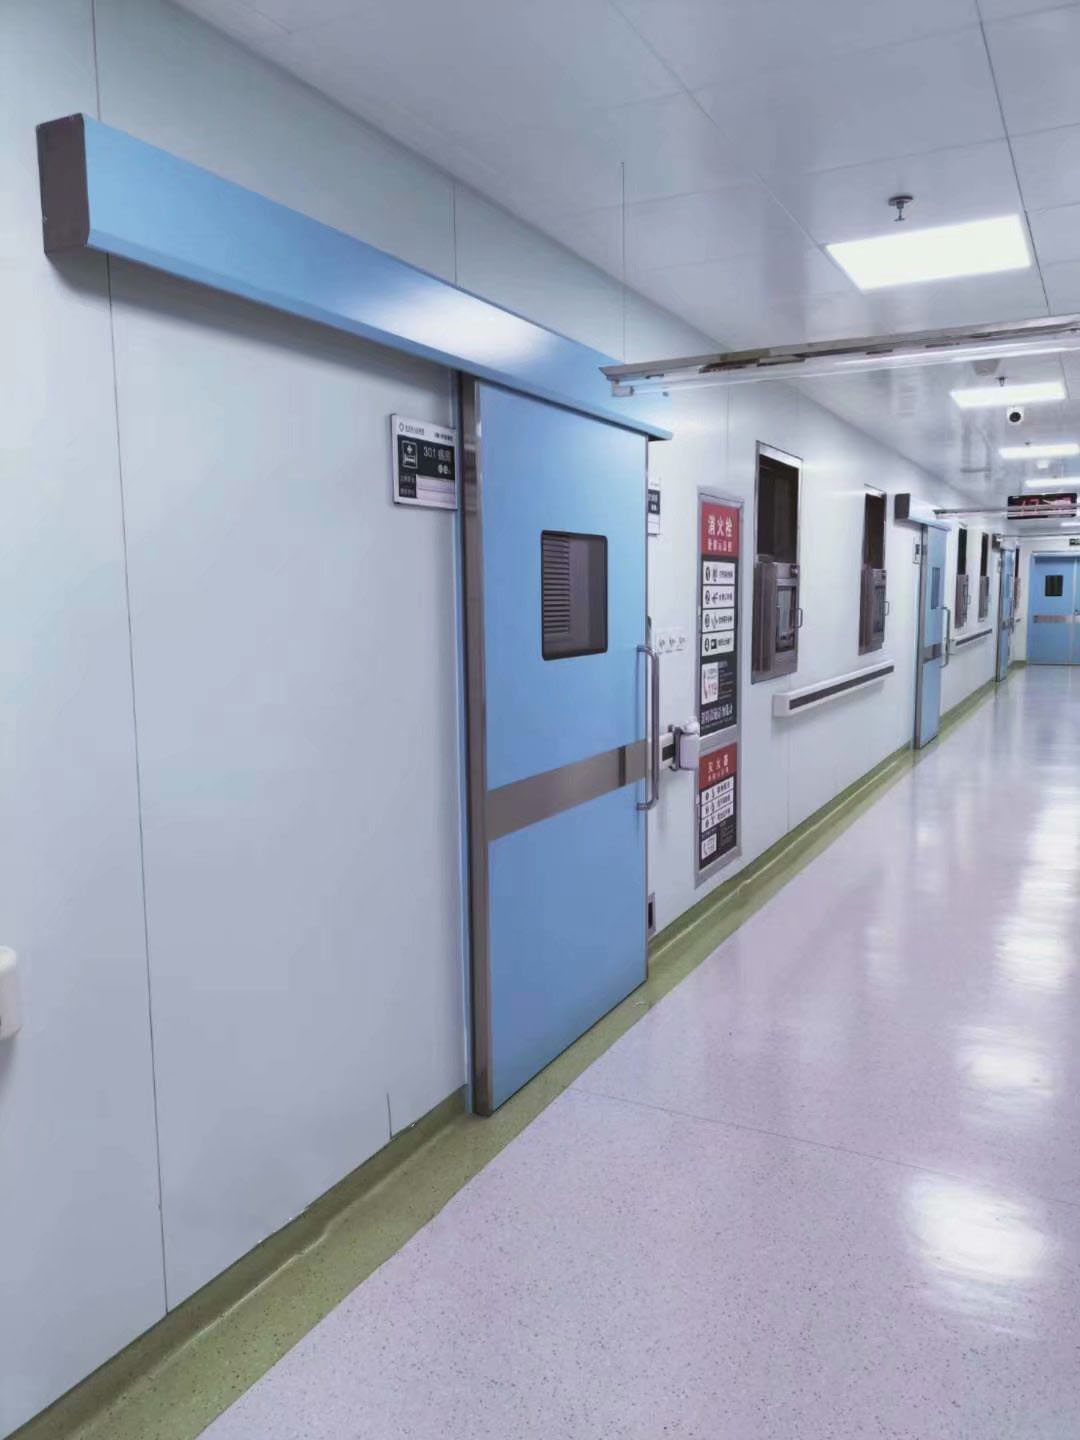 Automatic Hospital Doors